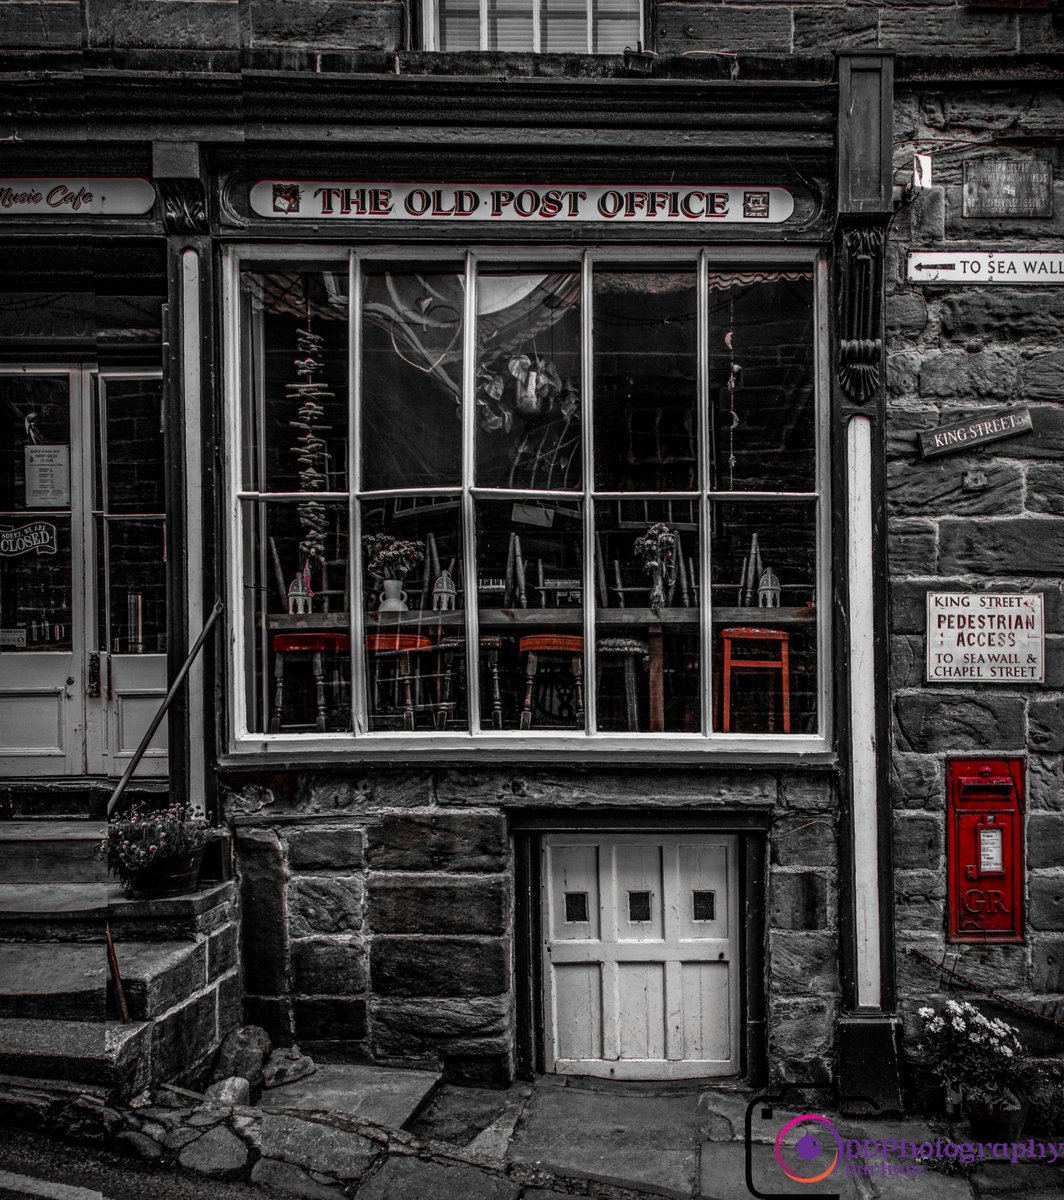 The Old Post Office Robin Hoods Bay #excellentbritain #thisprettyengland #lovegreatbritian #dreaminginpictures #robinhoodsbay #yorkshiretreasures #northyorkshire #yorkshirecoast #ukstaycation #ukvacation #ukcoast #ukcoastline #britishcoast #colourpop #yorkshirecoastline  #pretty